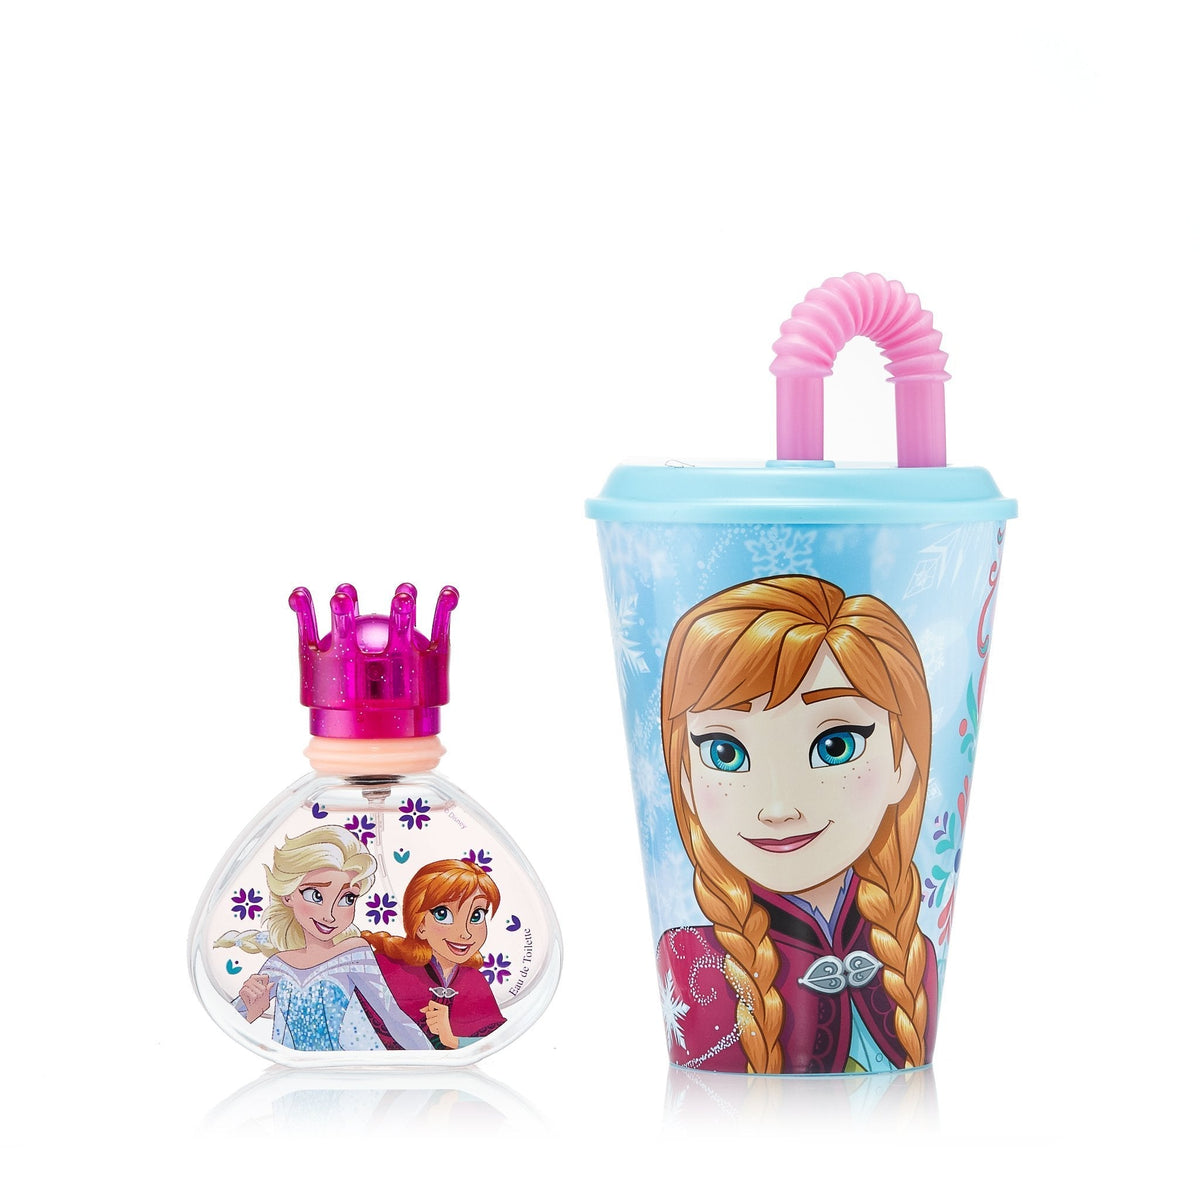 Frozen Lunch Box Gift Set for Girls by Disney 1.7 oz.